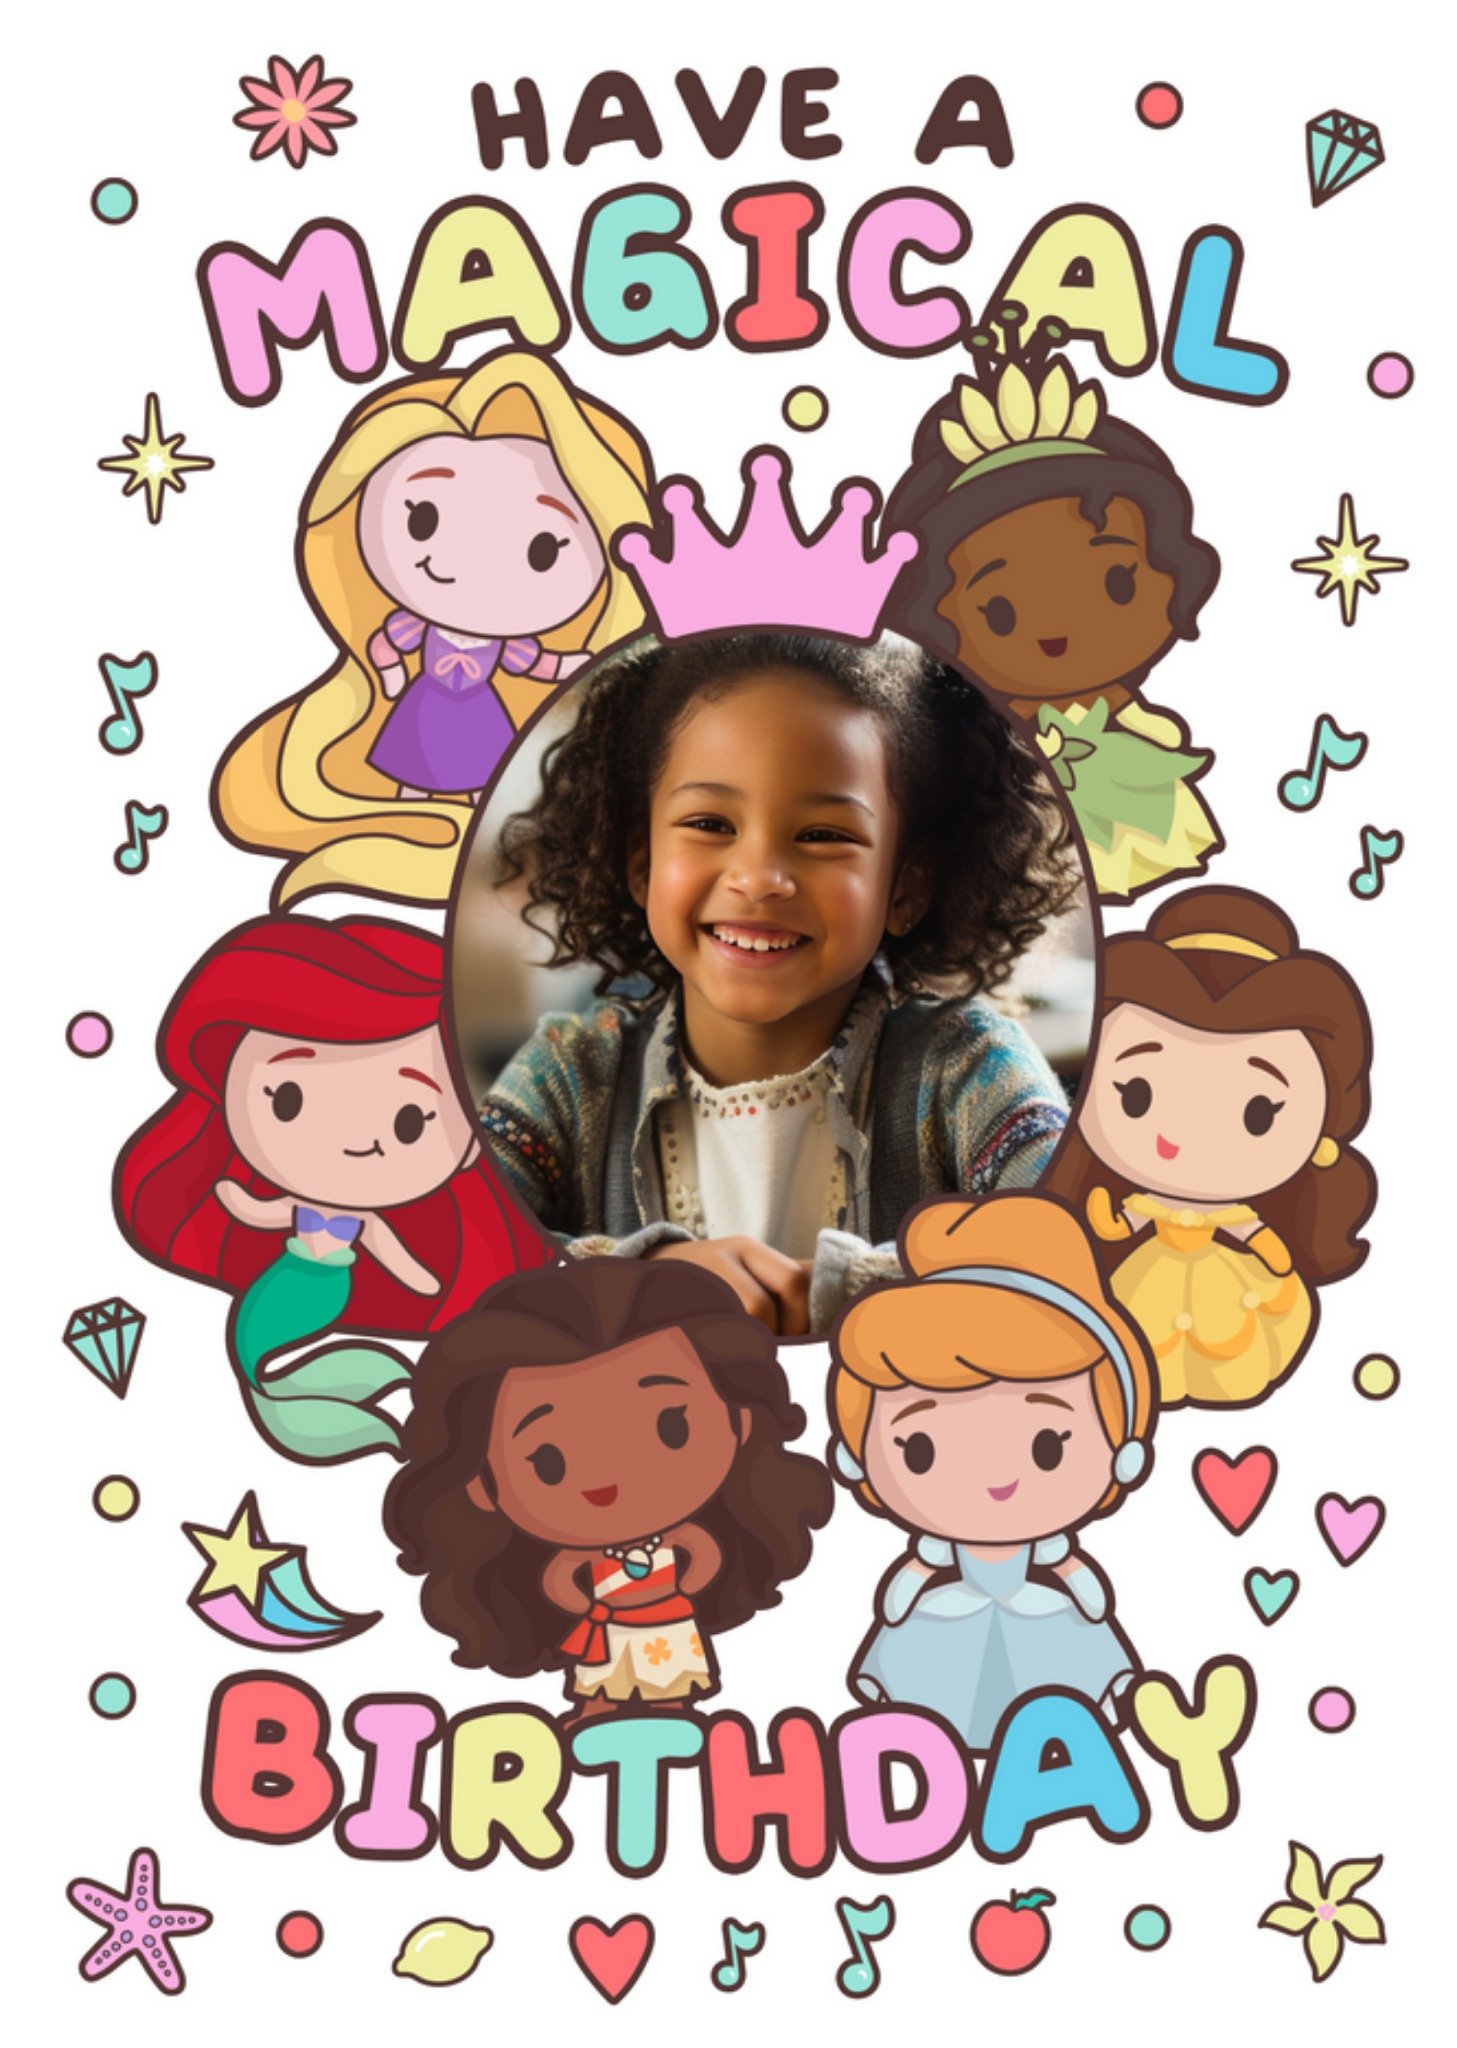 Disney Princess Have A Magical Birthday Cartoon Princess Illustrations Photo Upload Birthday Card, L